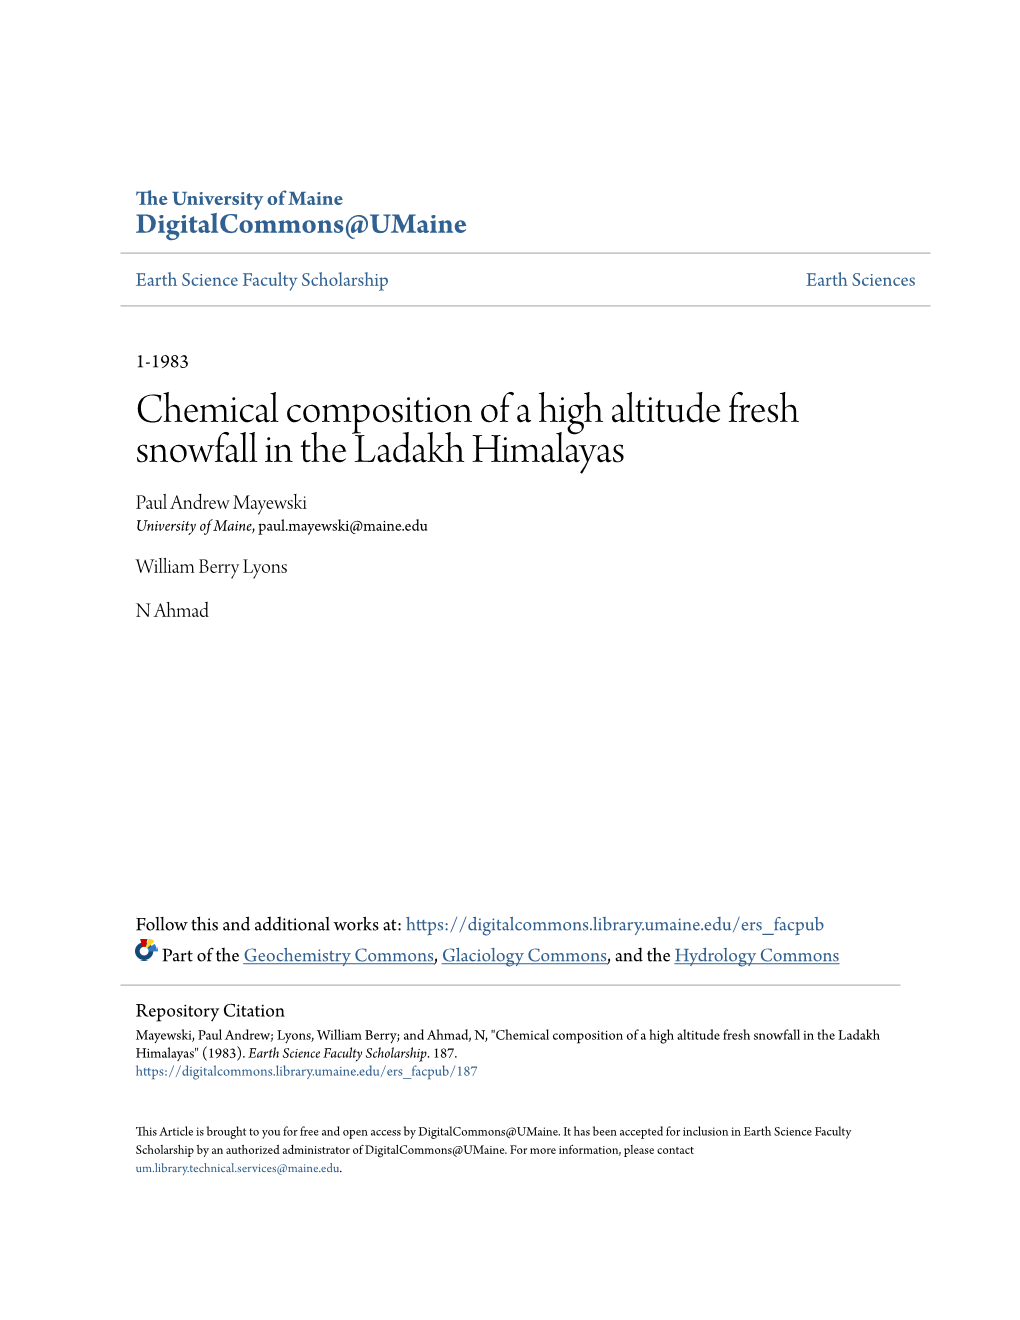 Chemical Composition of a High Altitude Fresh Snowfall in the Ladakh Himalayas Paul Andrew Mayewski University of Maine, Paul.Mayewski@Maine.Edu